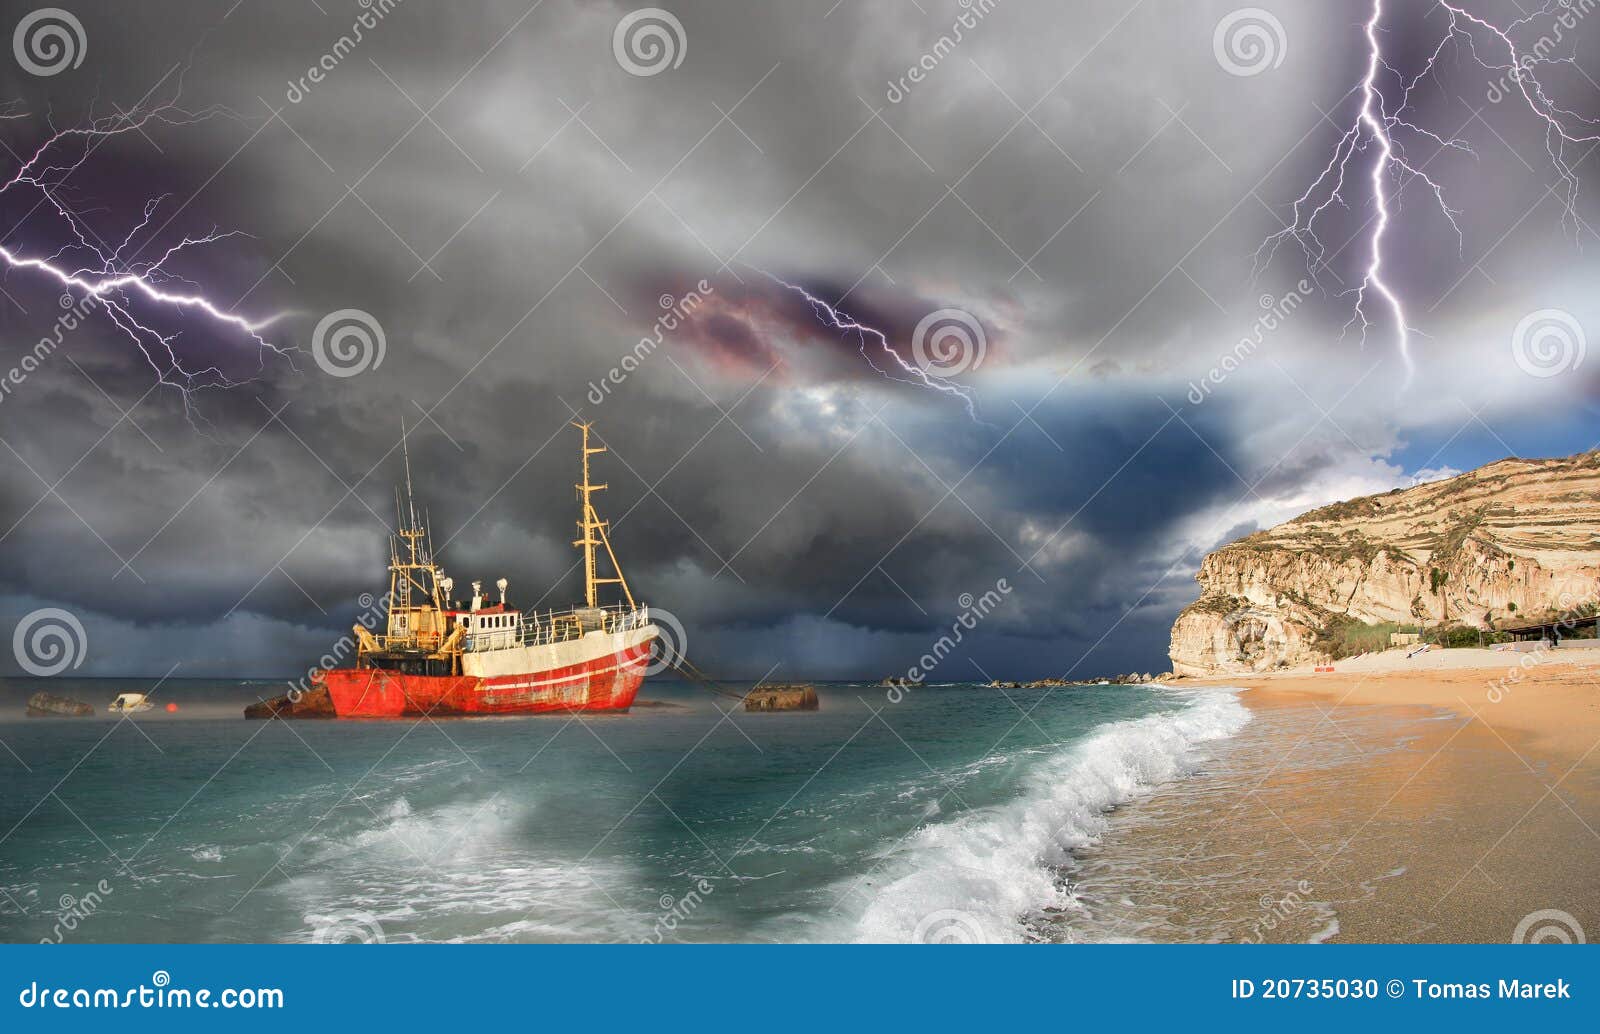 https://thumbs.dreamstime.com/z/fishing-boat-big-storm-20735030.jpg